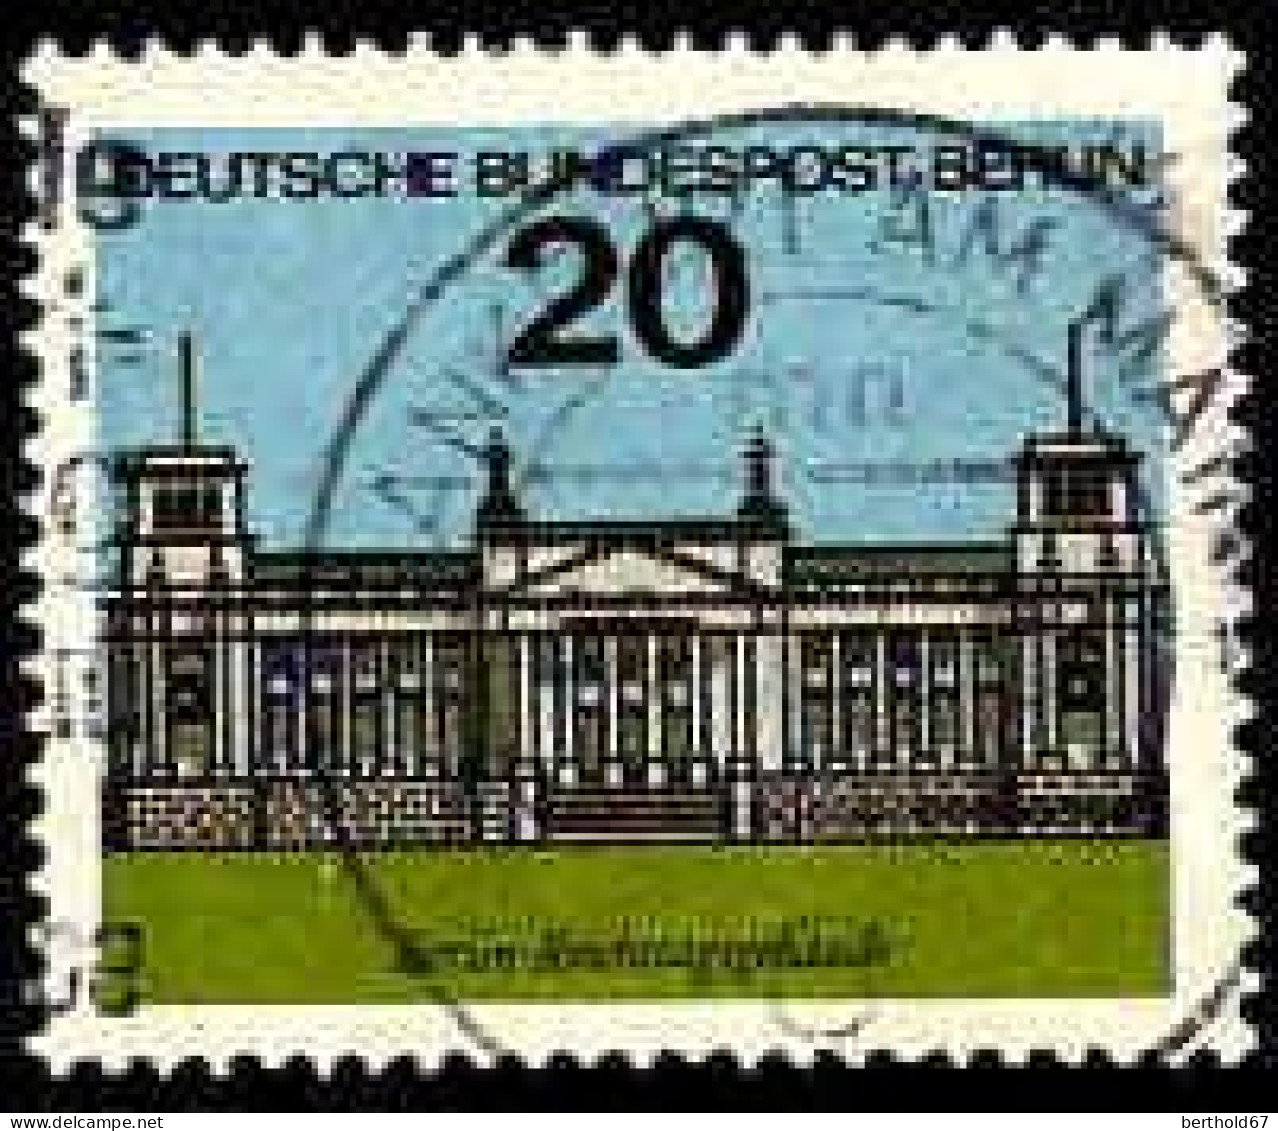 Berlin Poste Obl Yv:213 Mi:236 Berlin-Reichstagsgebäude (TB Cachet Rond) - Usados